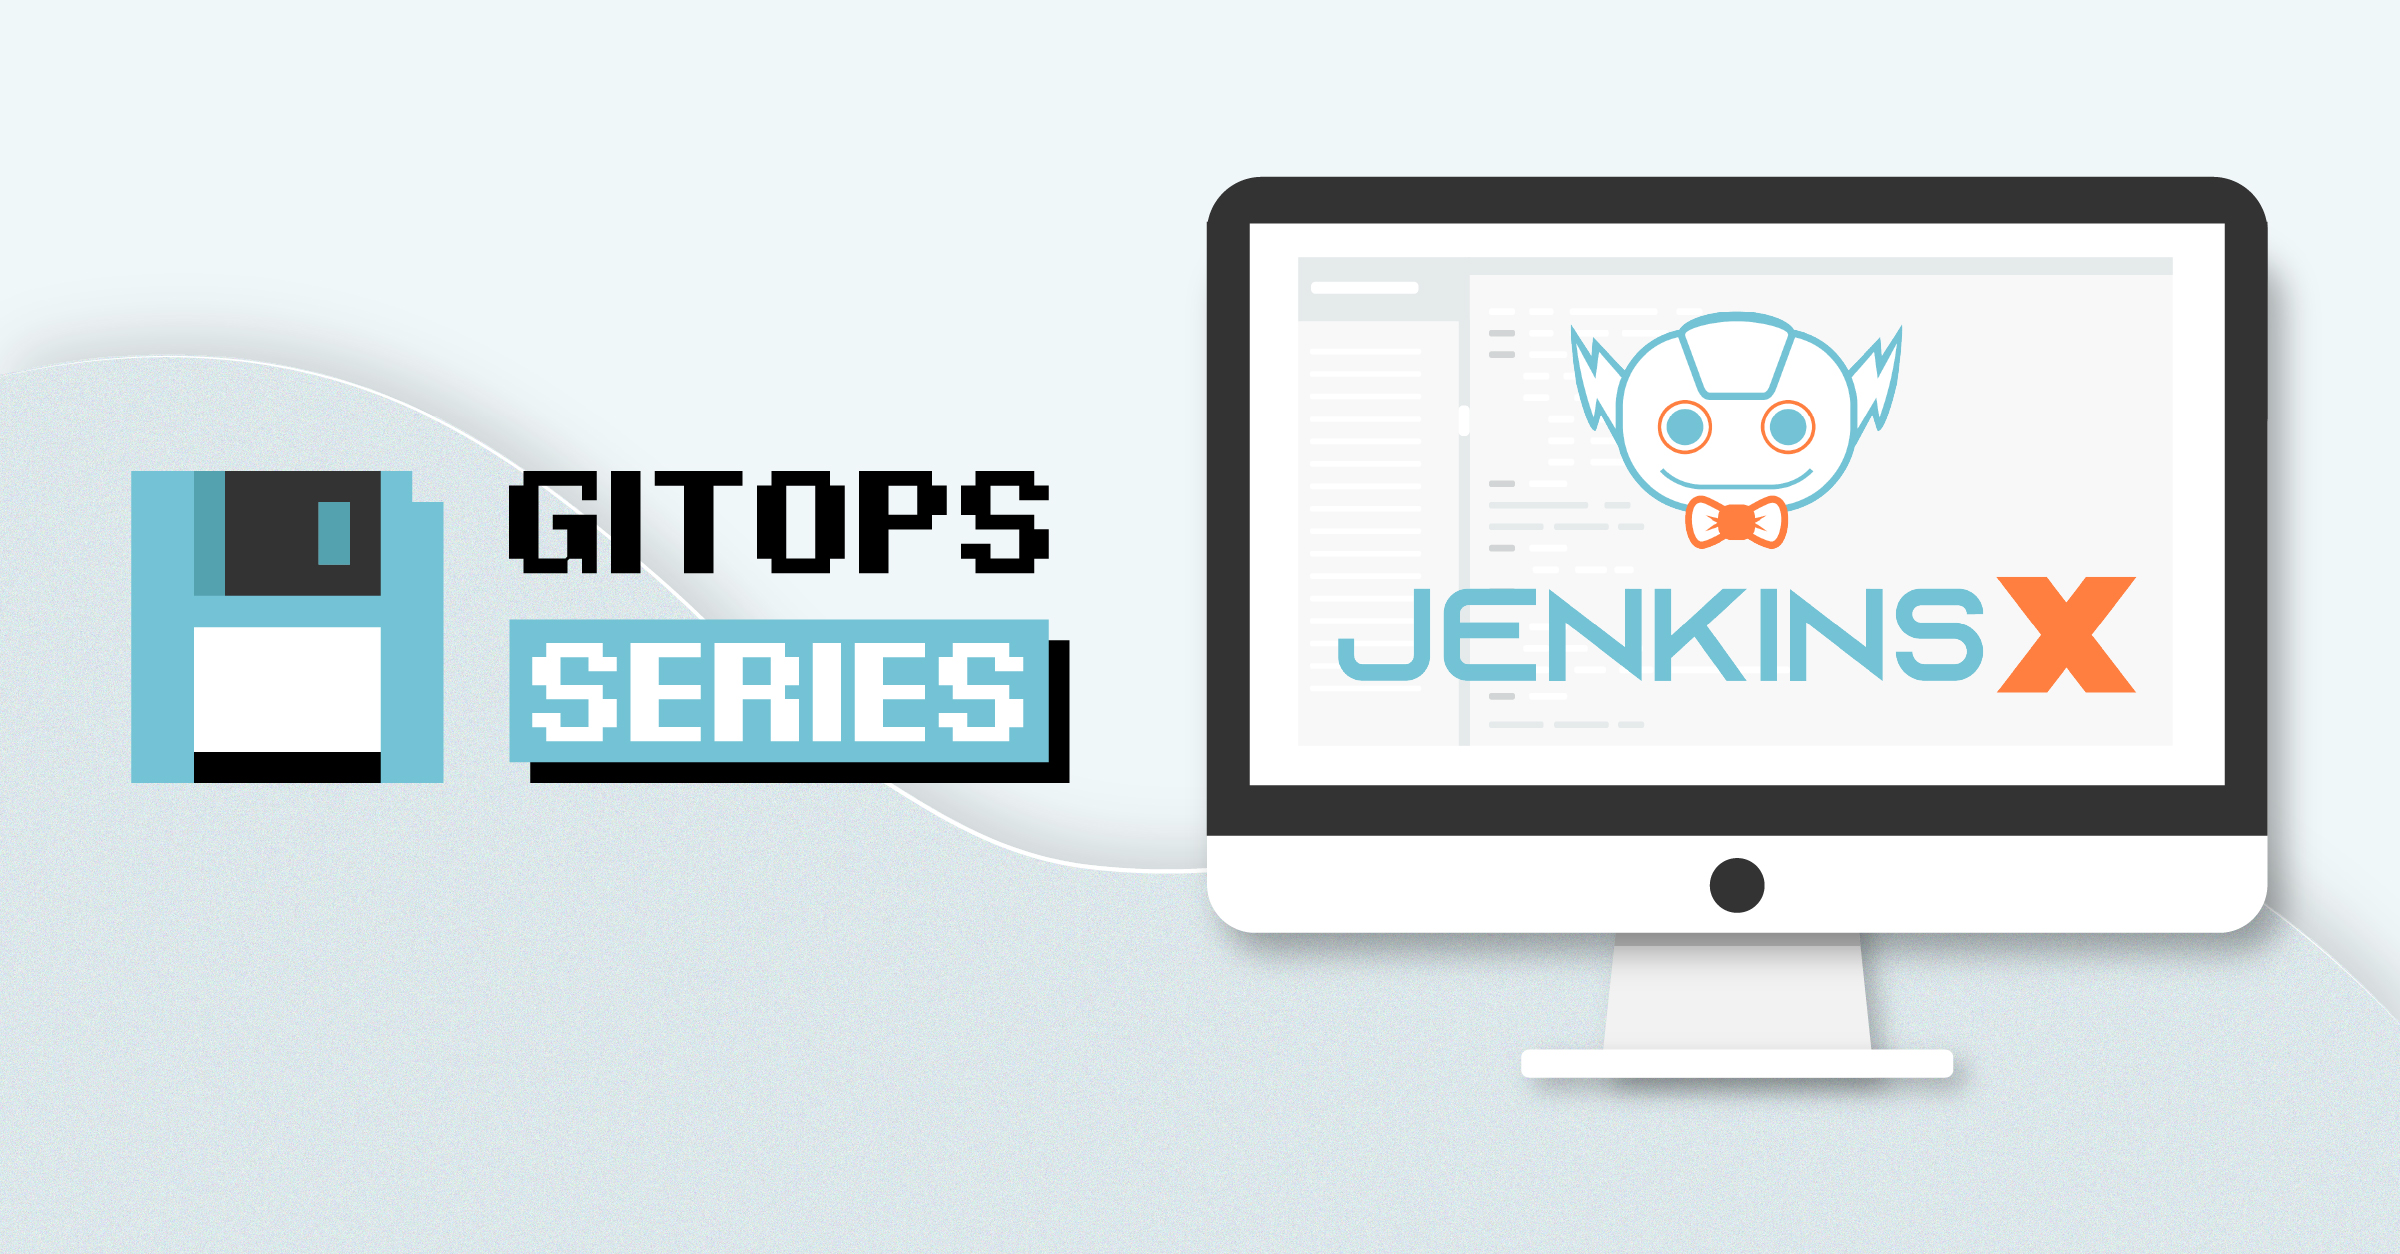 GitOps with Jenkins X image thumbnail